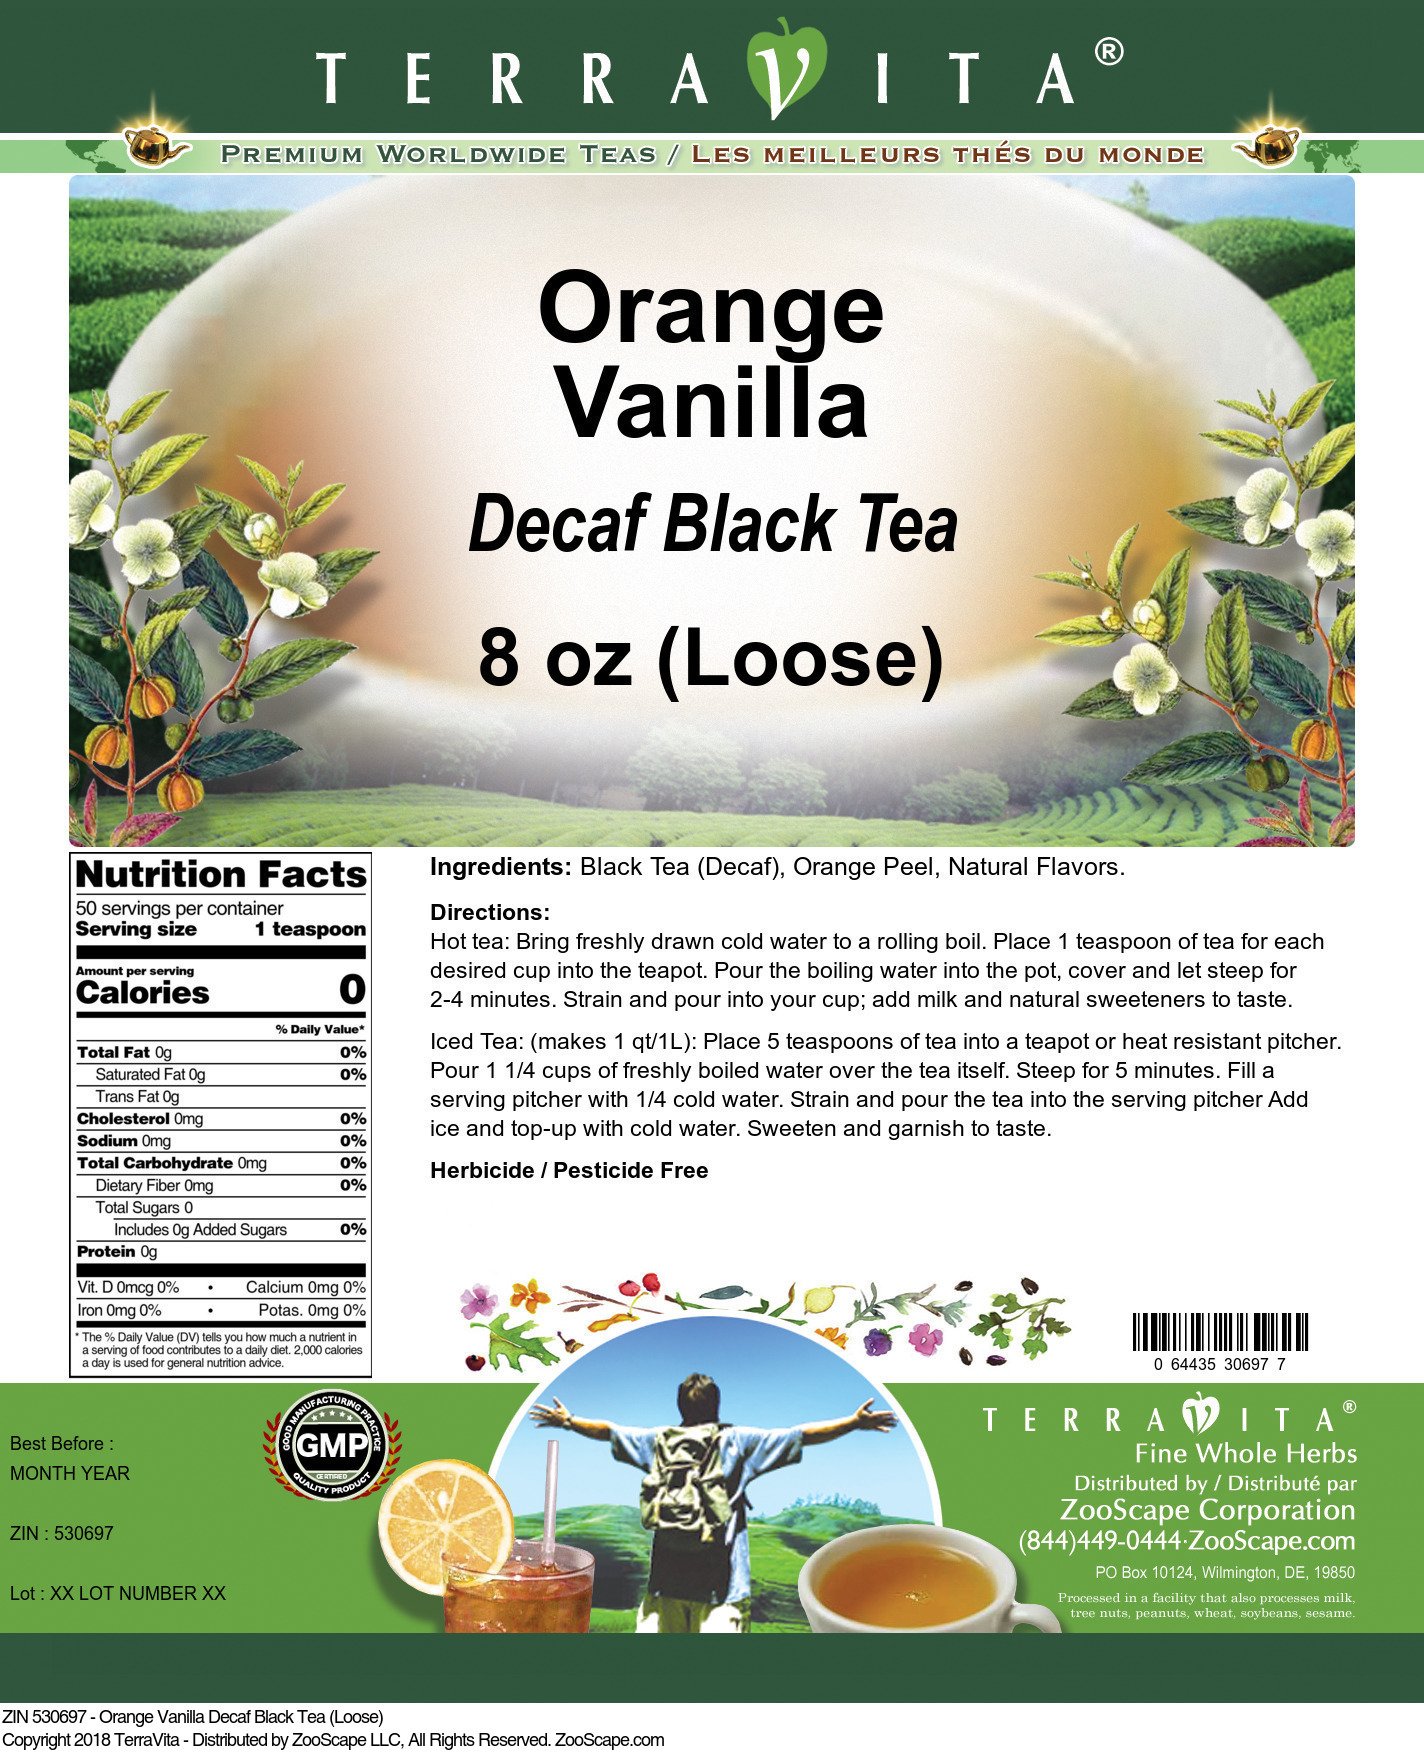 Orange Vanilla Decaf Black Tea (Loose) - Label